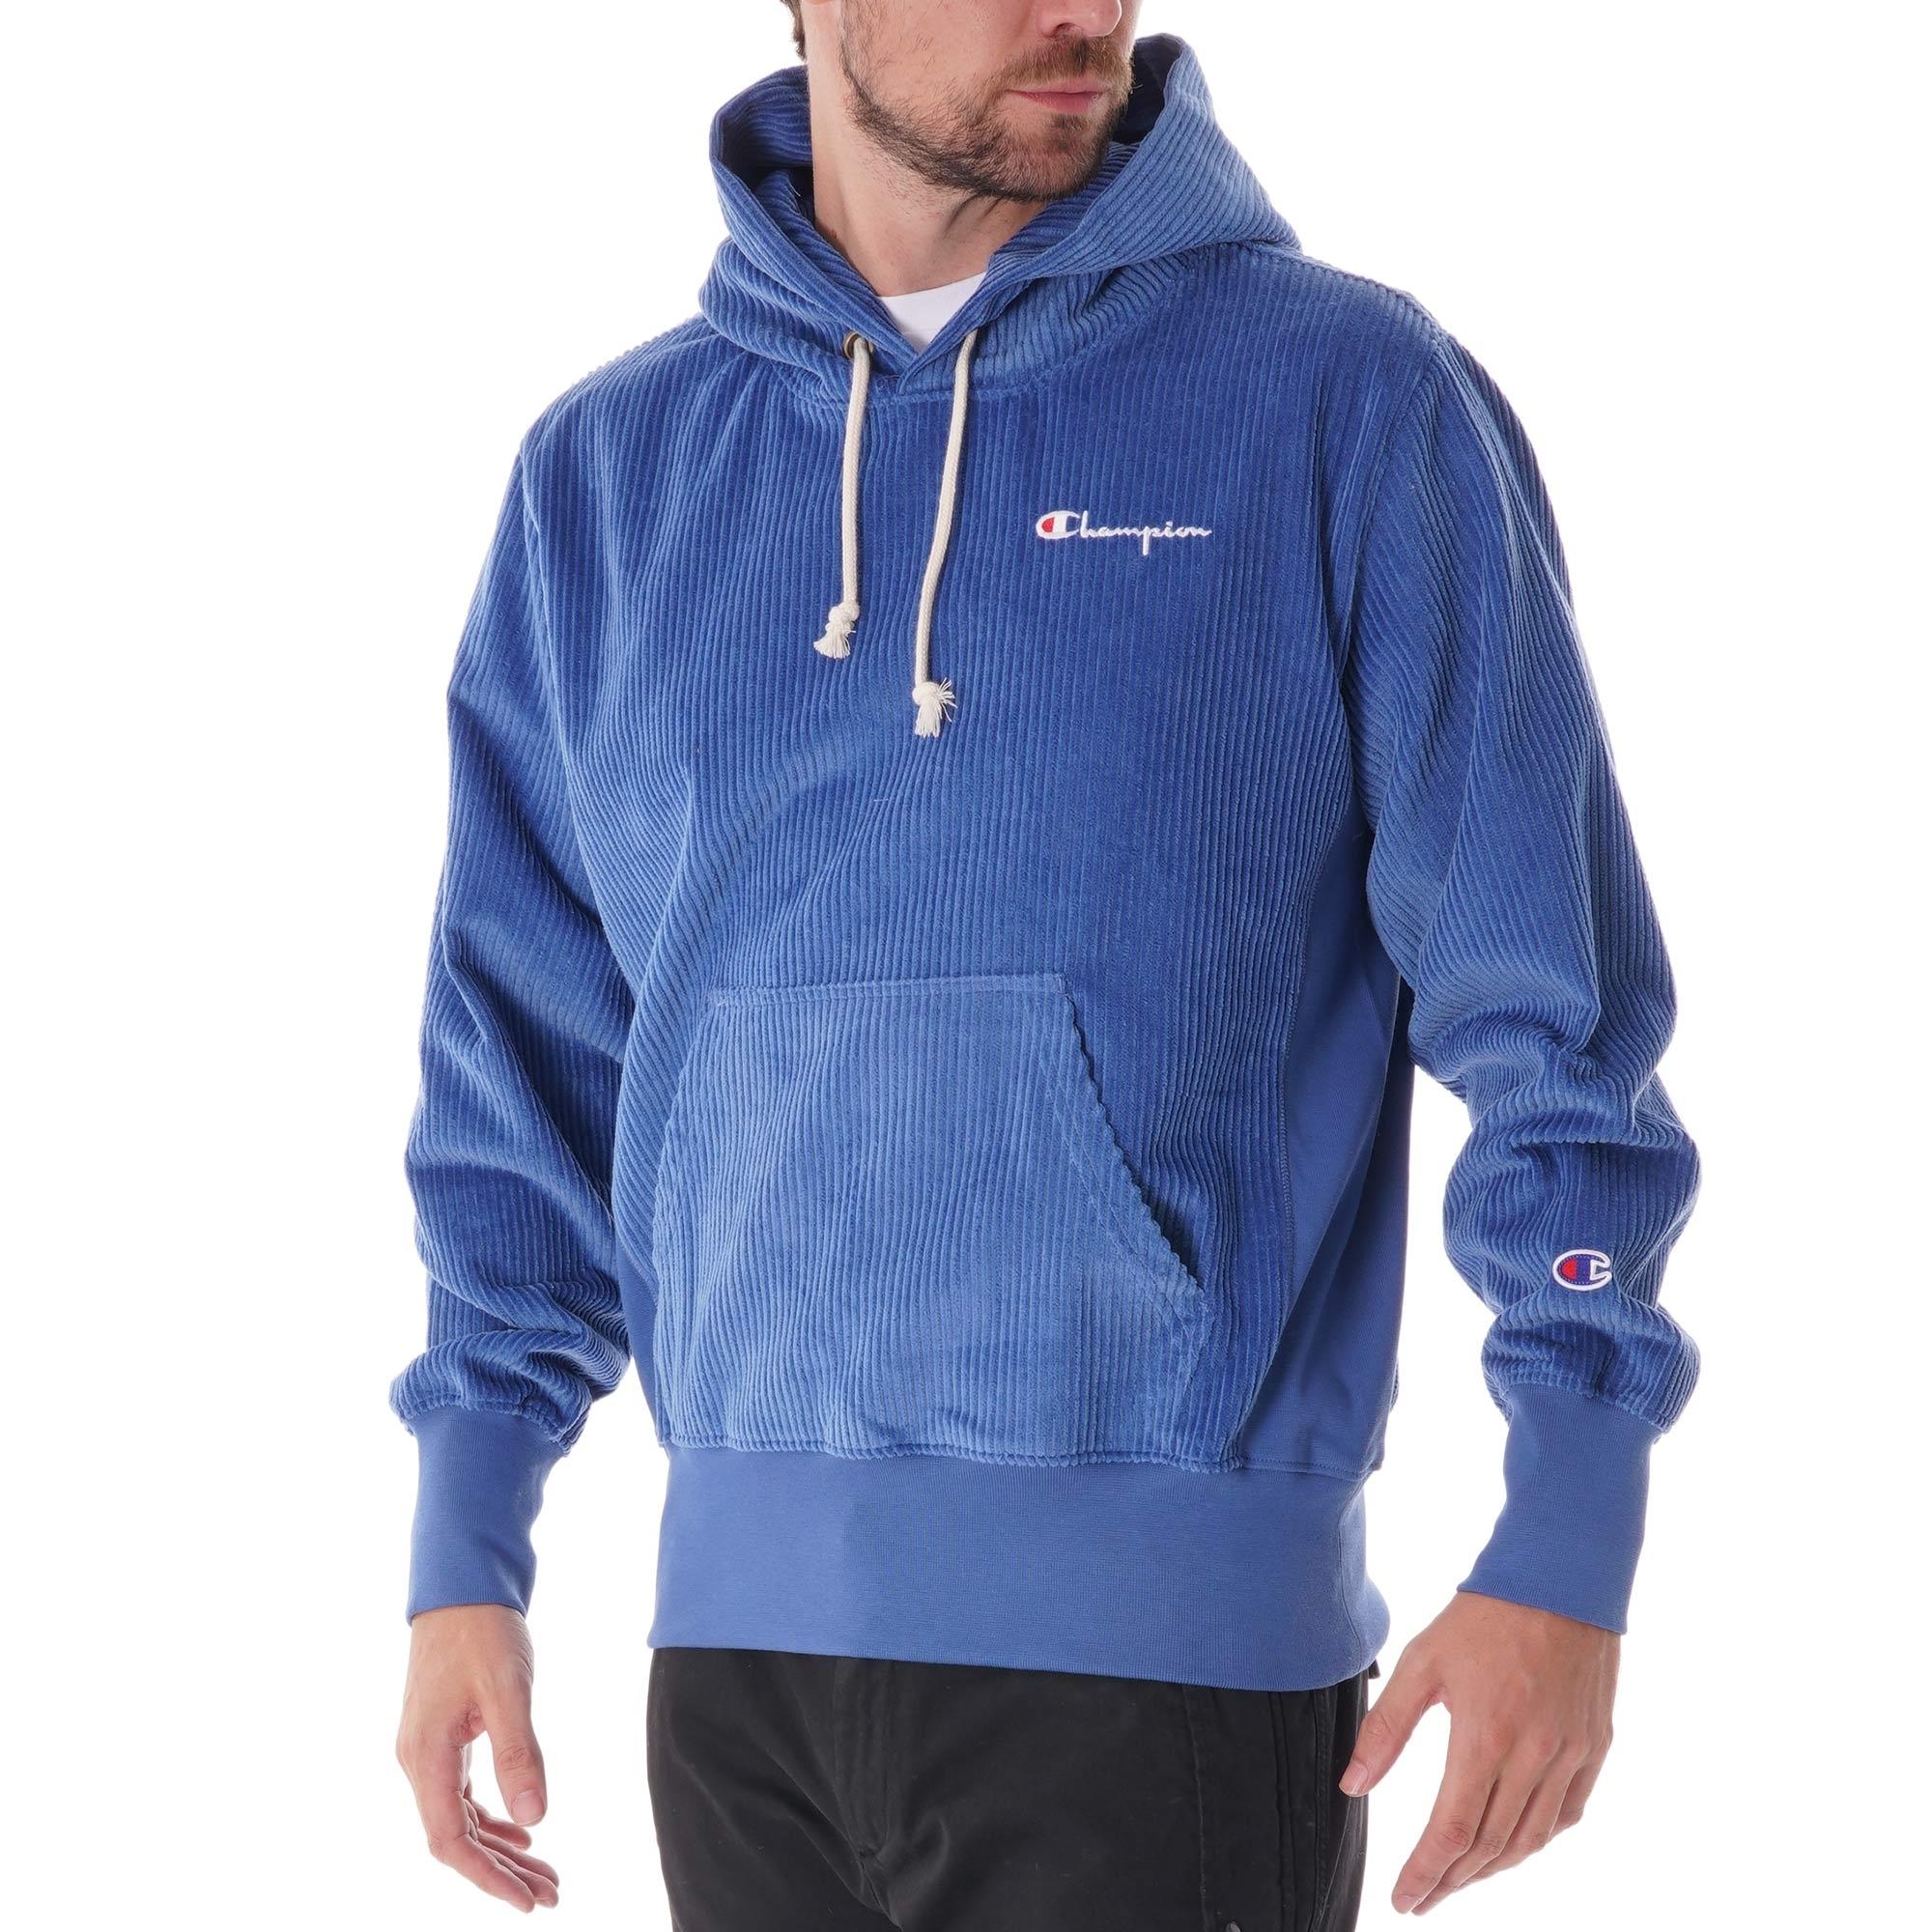 Champion Corduroy Hoodie Sweatshirt - Blue 213691-feb for Men - Lyst